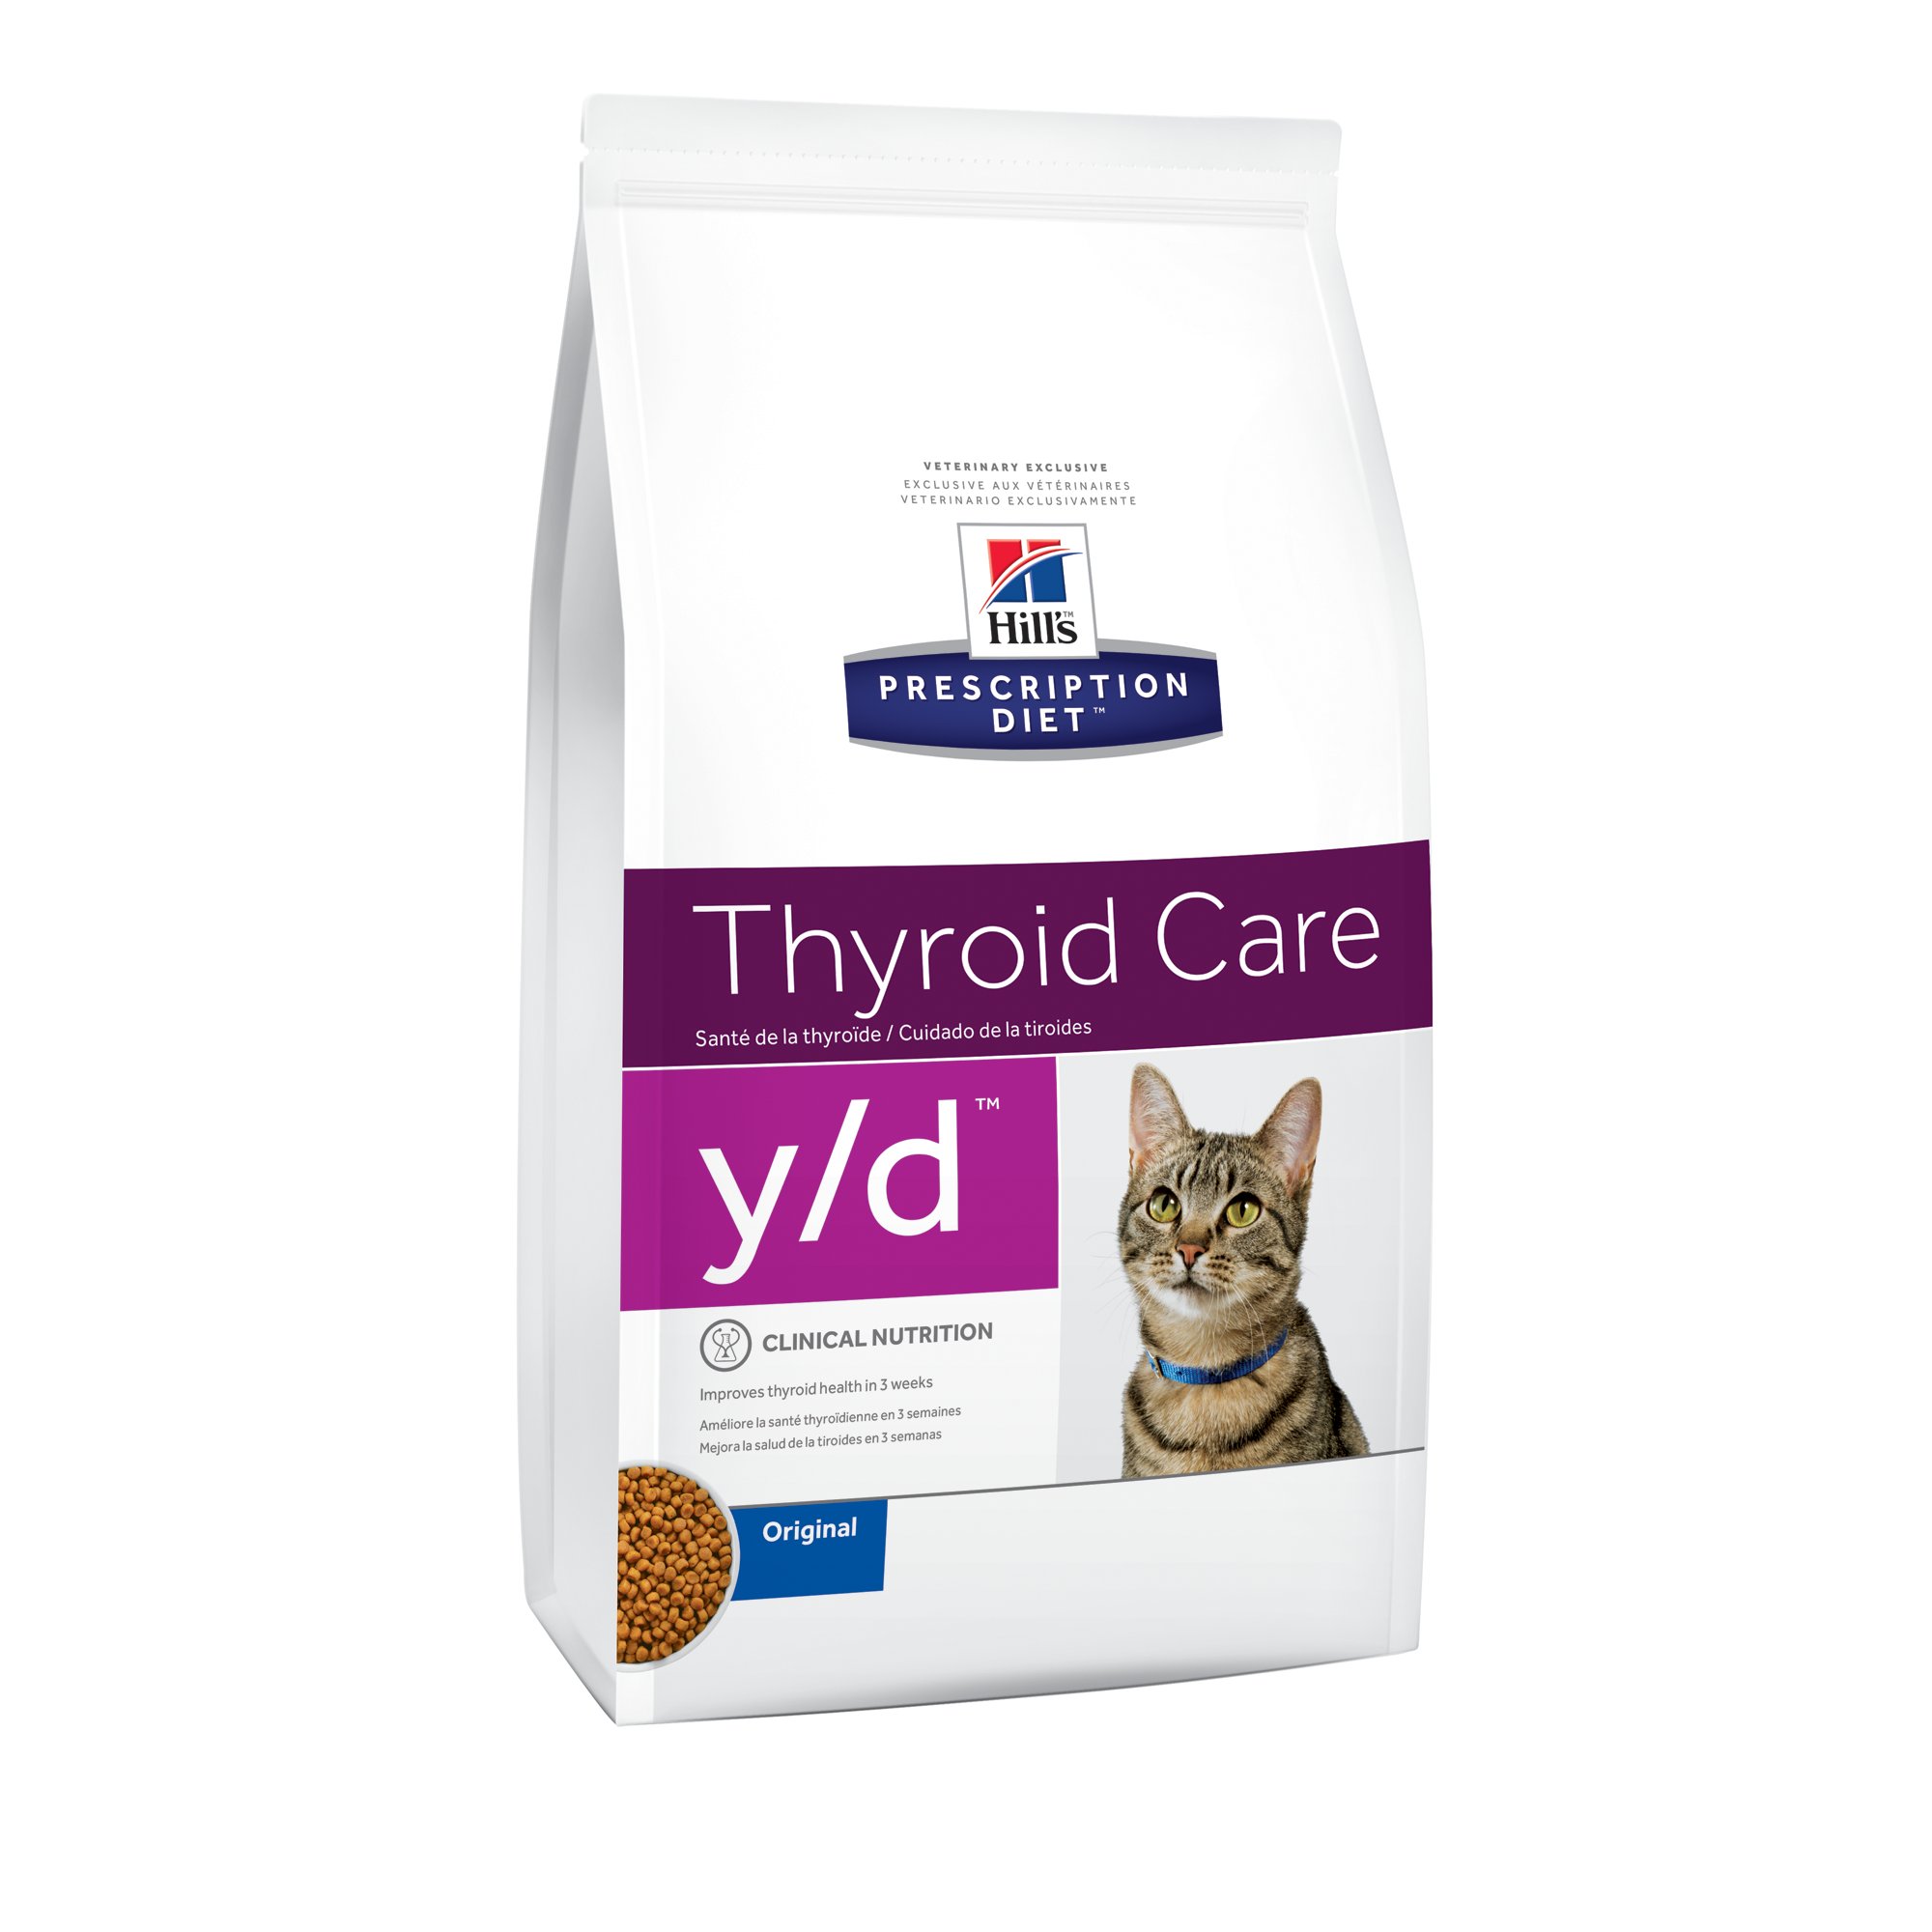 Thyroid Care Original Dry Cat Food 